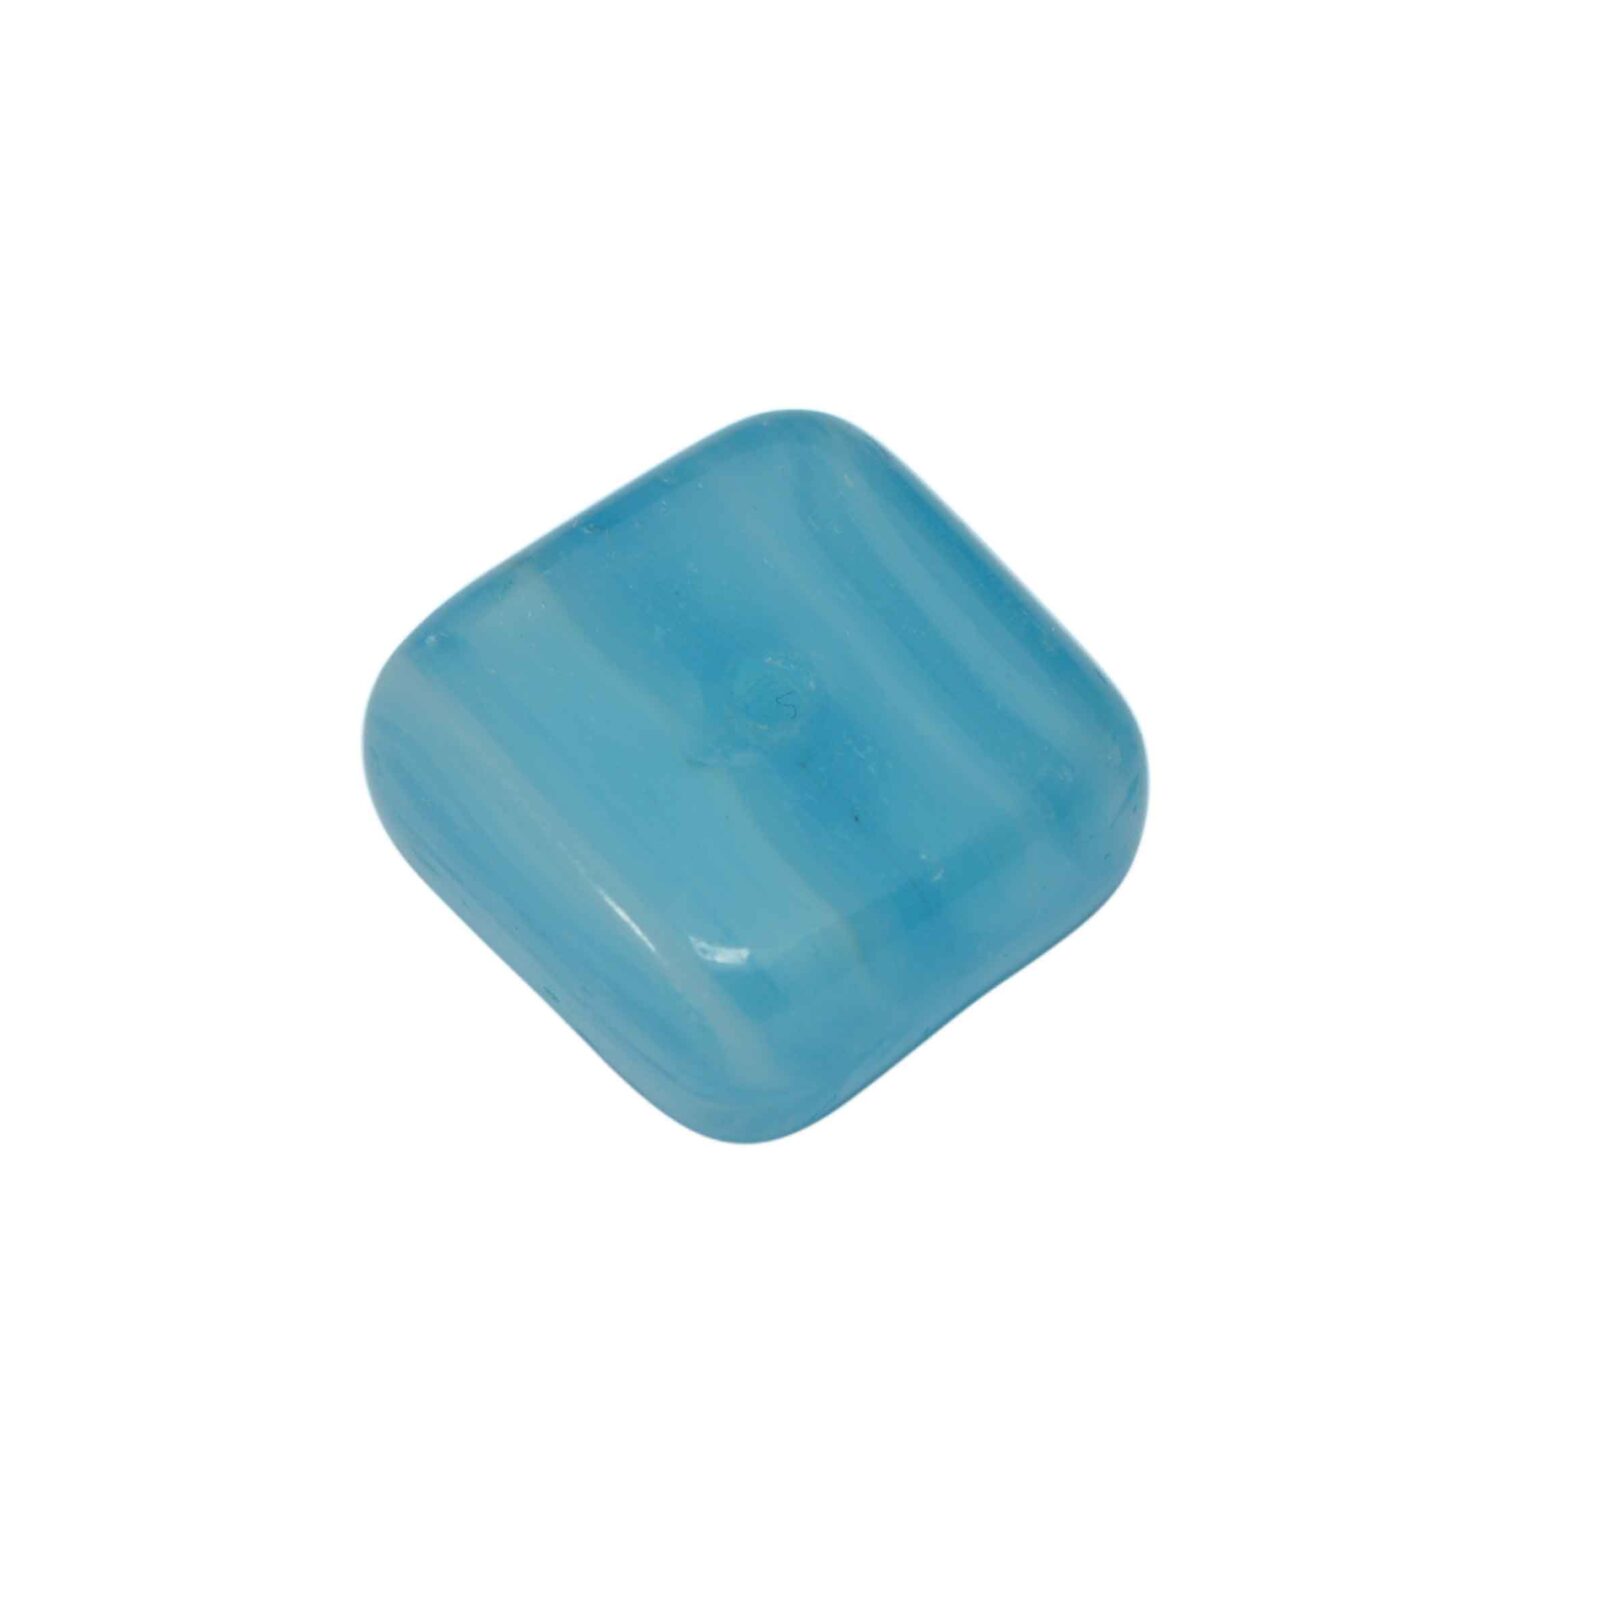 Blauwe kubus glaskraal met witte strepen